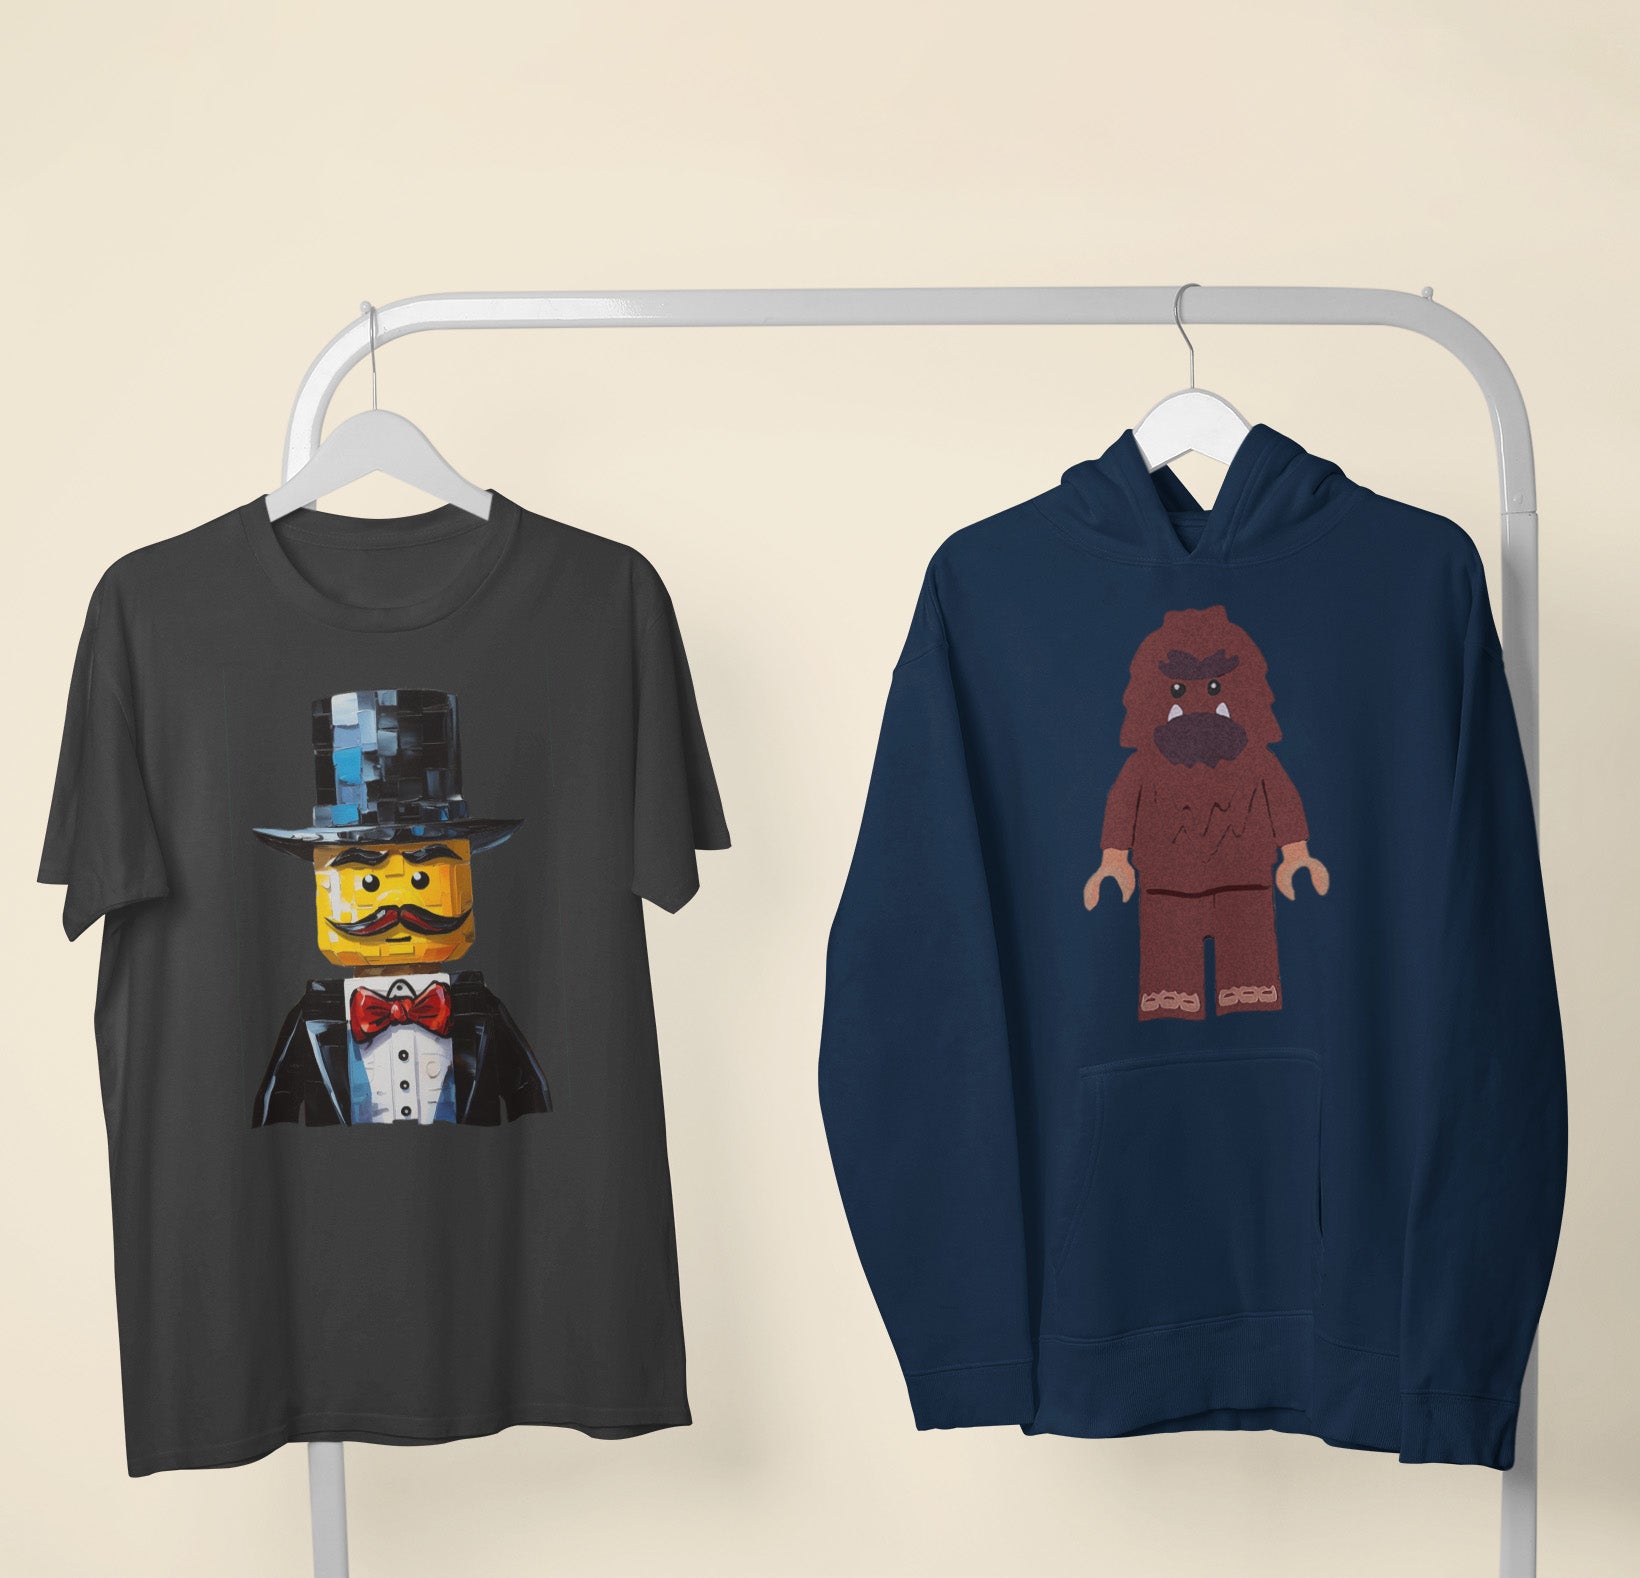 lego inspired artwork apparel t-shirts hoodie